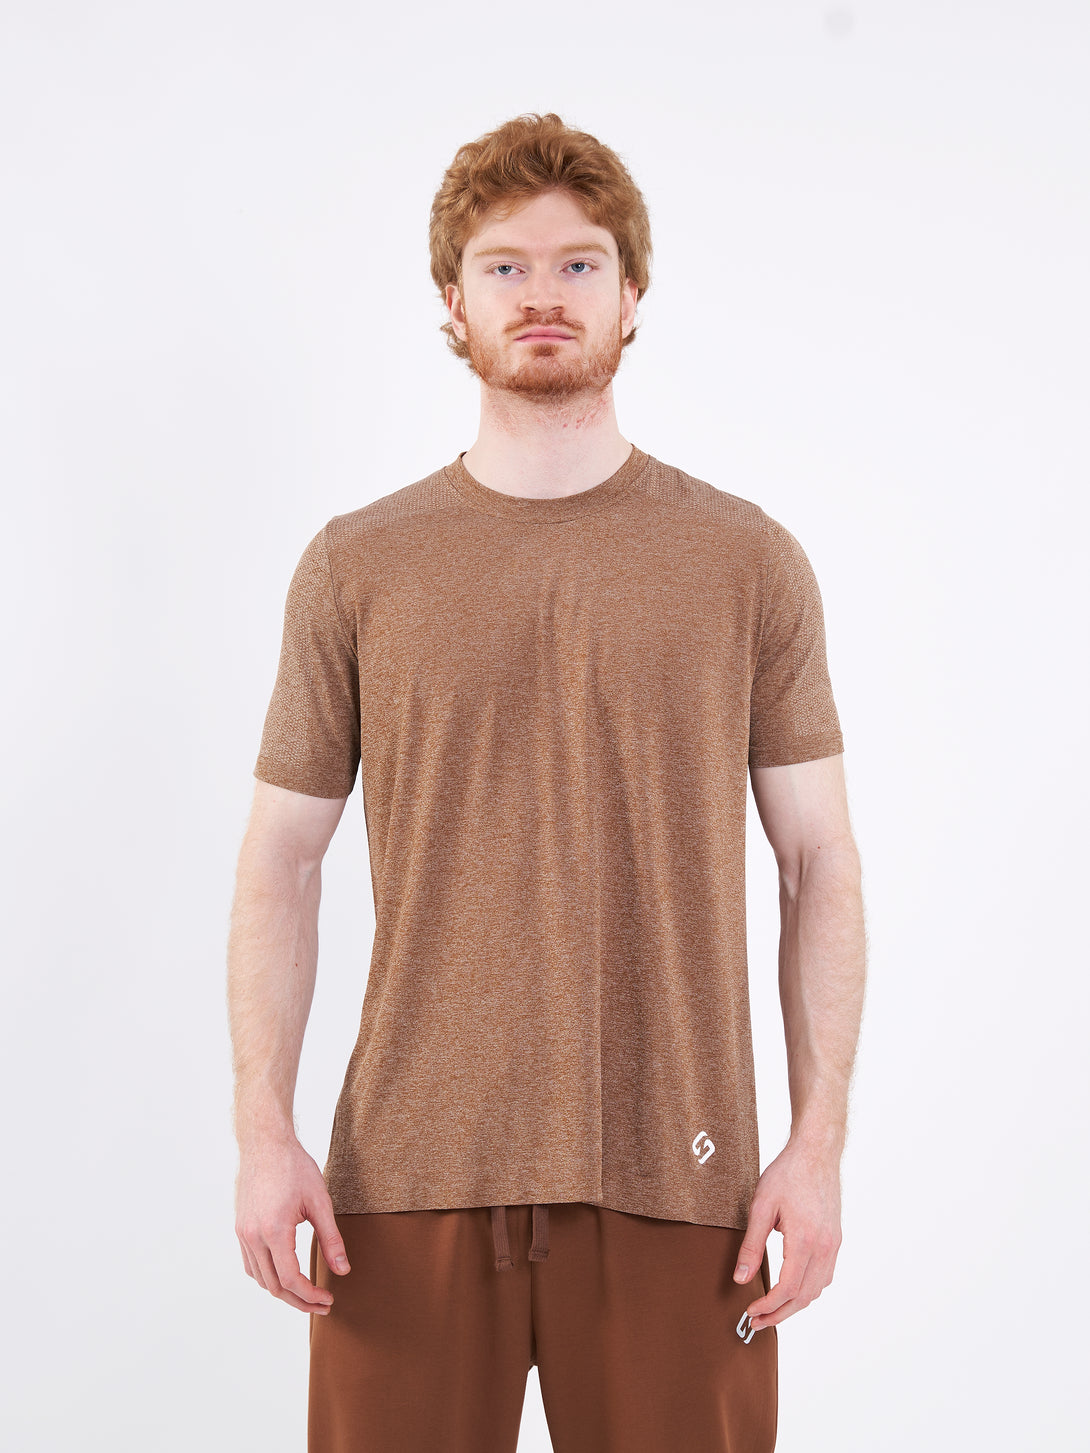 A Man Wearing Toffe Brown Color Unisex Seamless Melange T-Shirt. Enhanced Comfort